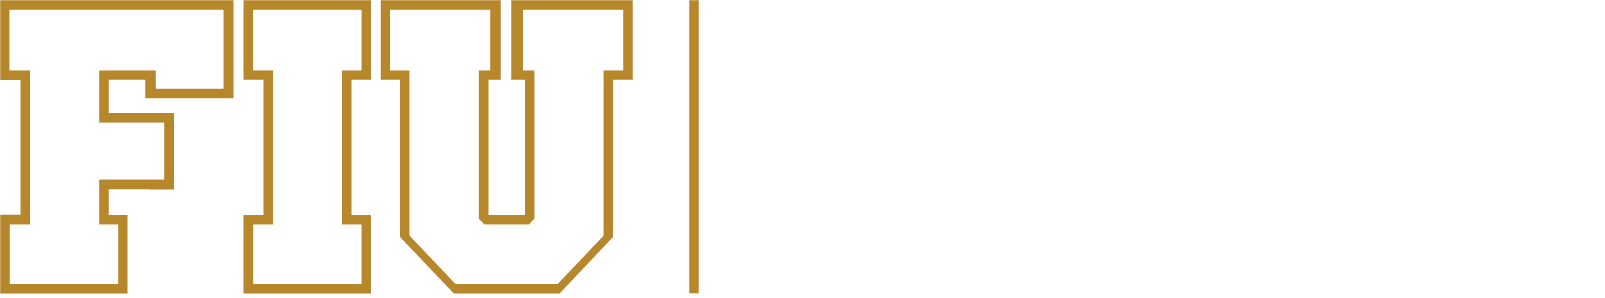 Pino-Global-Enter-Ctr-hrz-color-rev